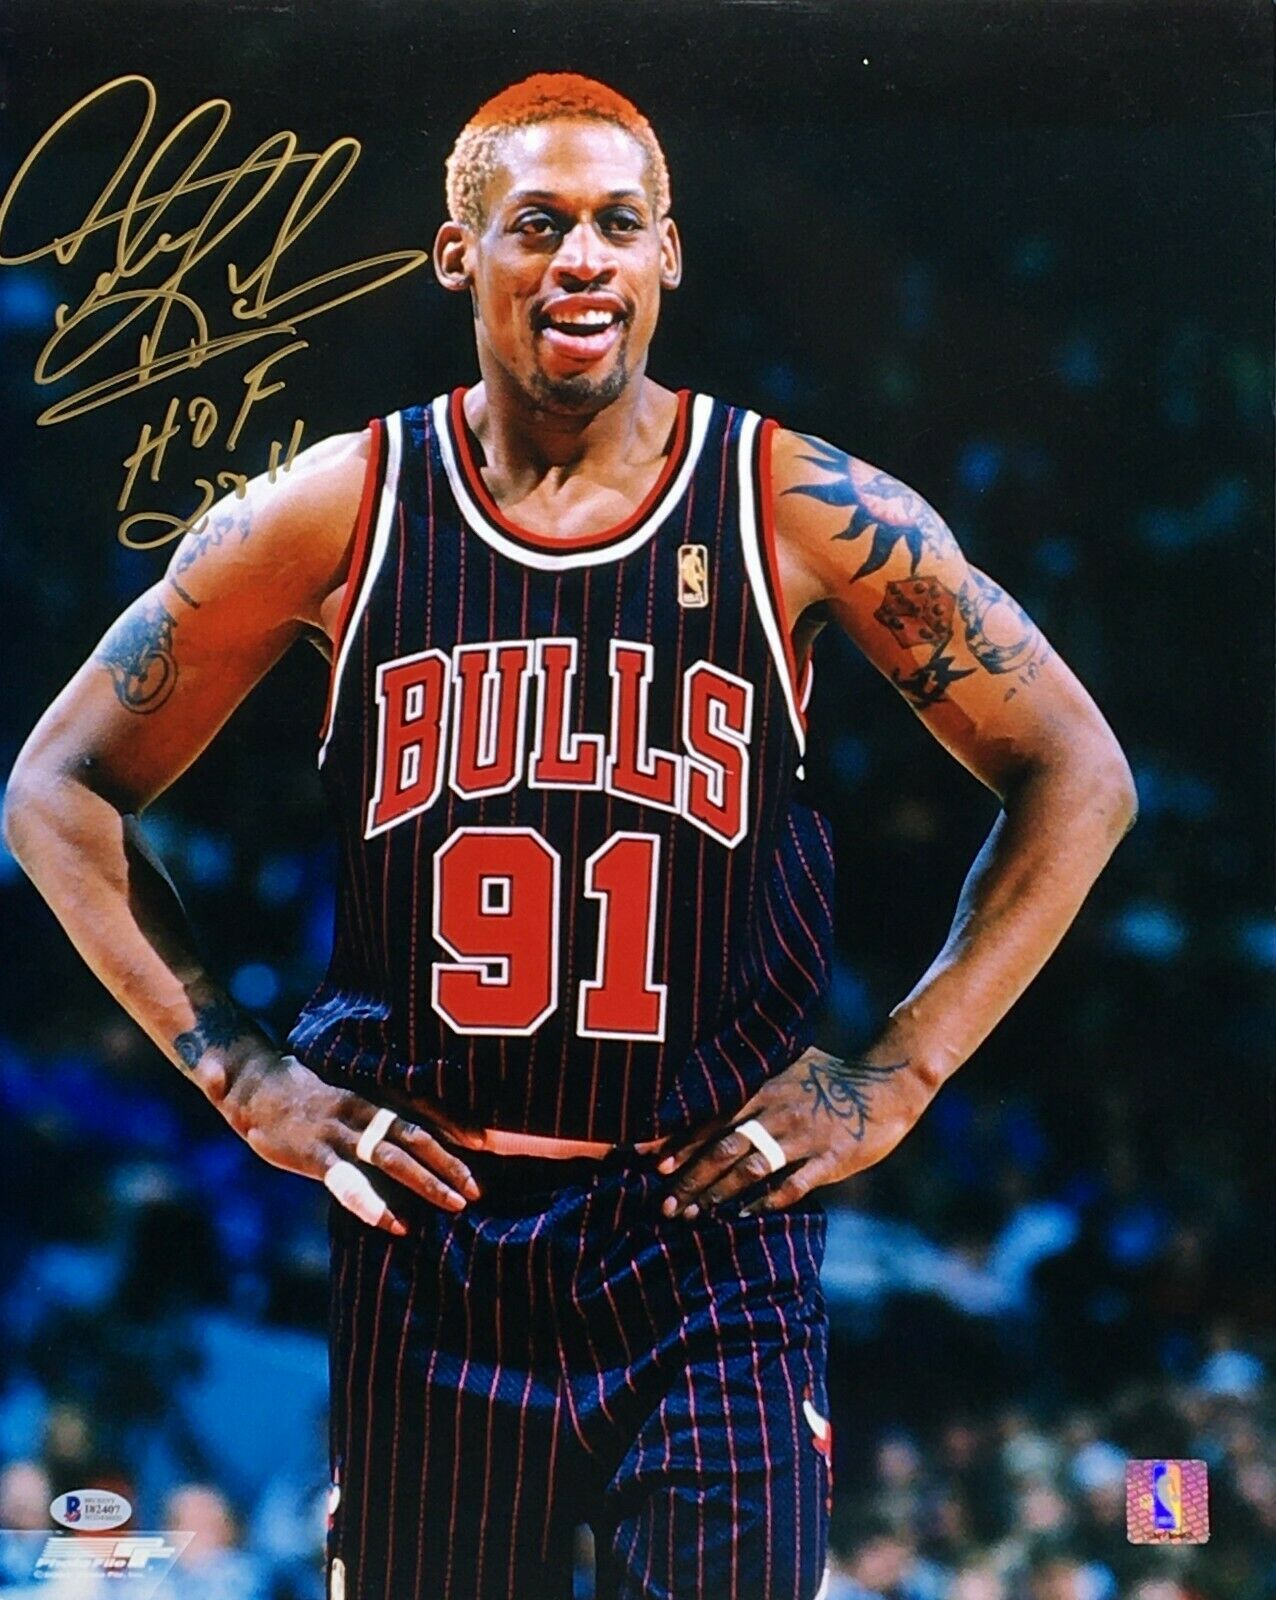 Mitchell & Ness Women's Chicago Bulls Dennis Rodman #91 NBA Cropped Je